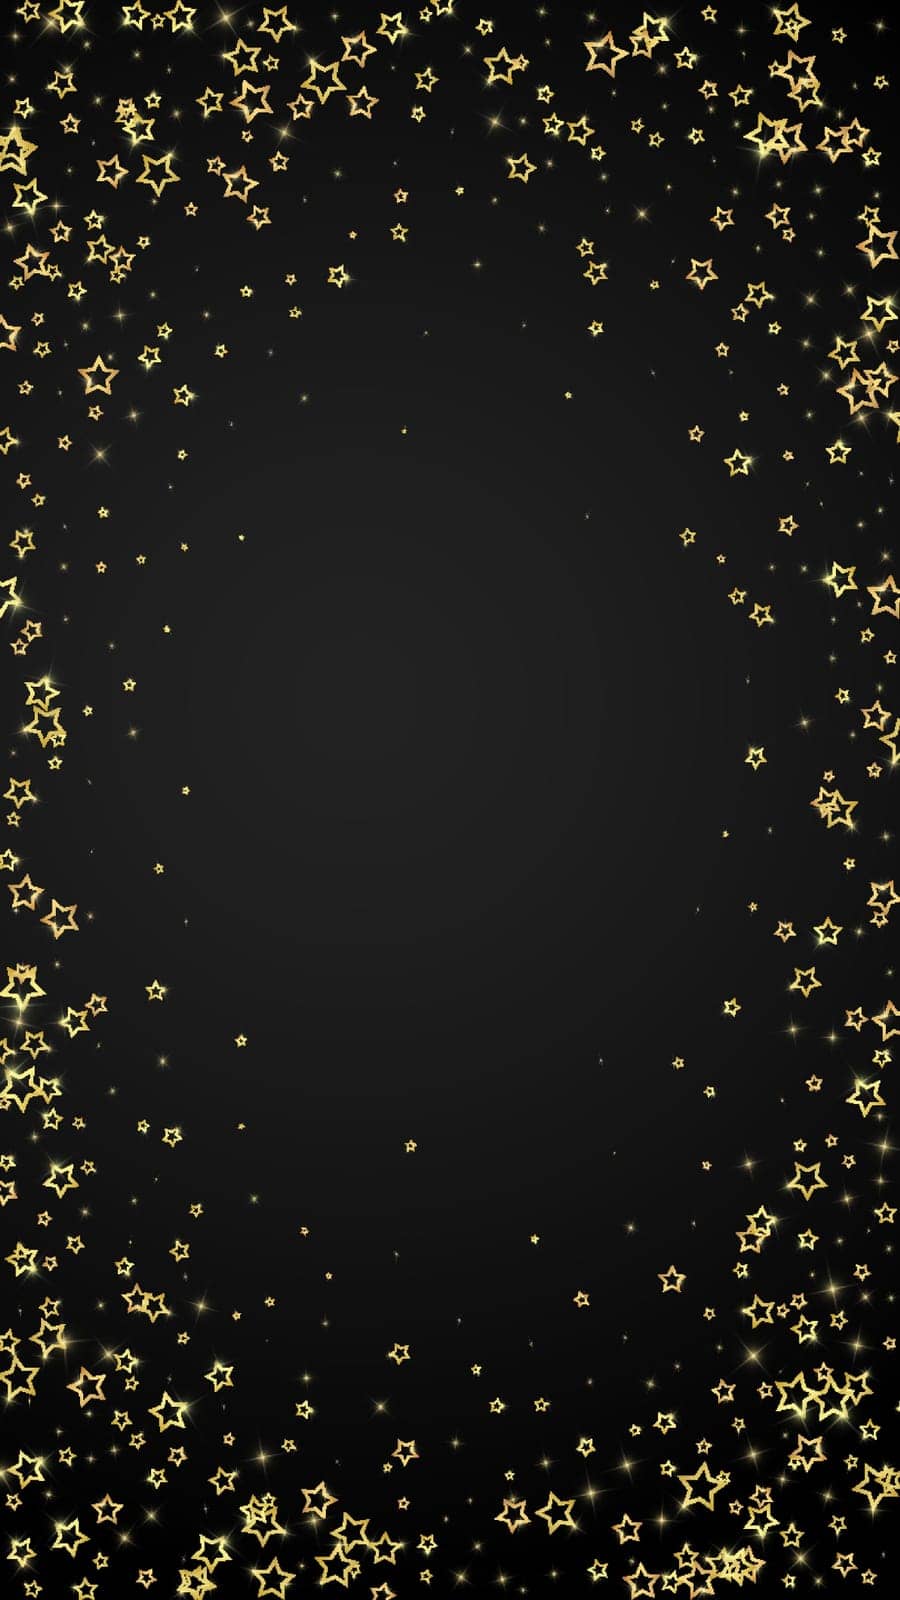 Twinkle stars scattered around randomly, flying, falling down, floating. Christmas celebration concept. Festive stars vector illustration on black background.